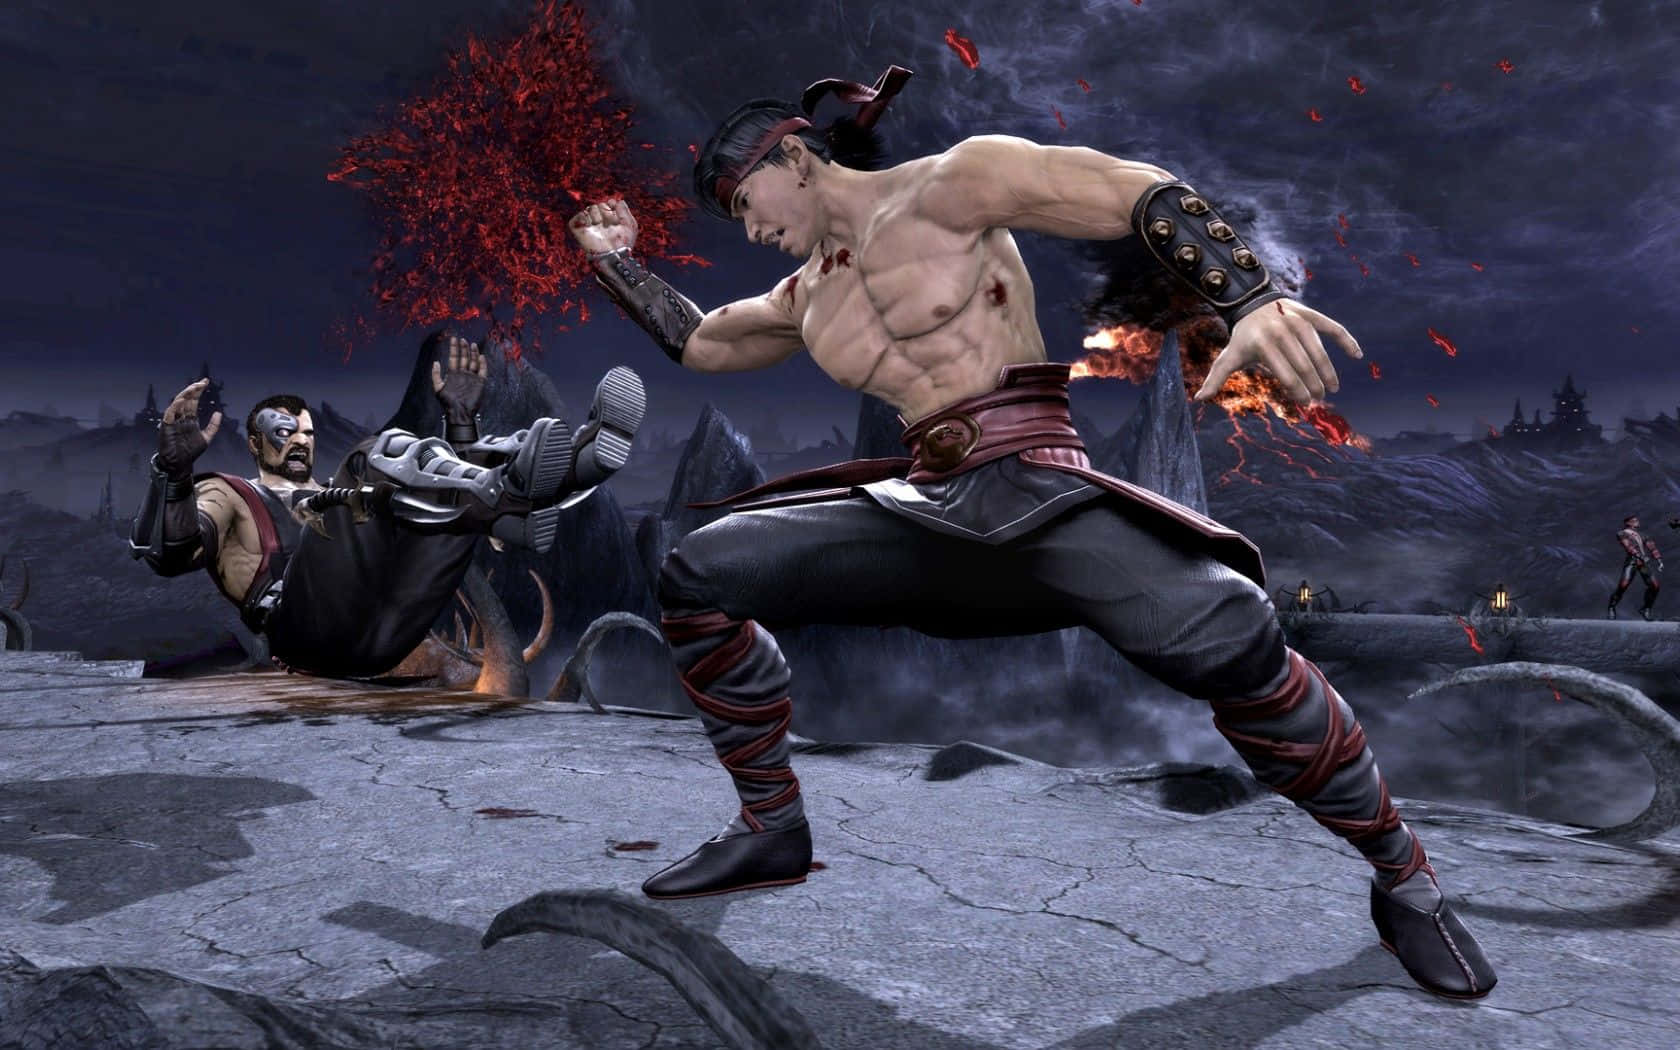 Download Mortal Kombat - Liu Kang in Action Wallpaper | Wallpapers.com